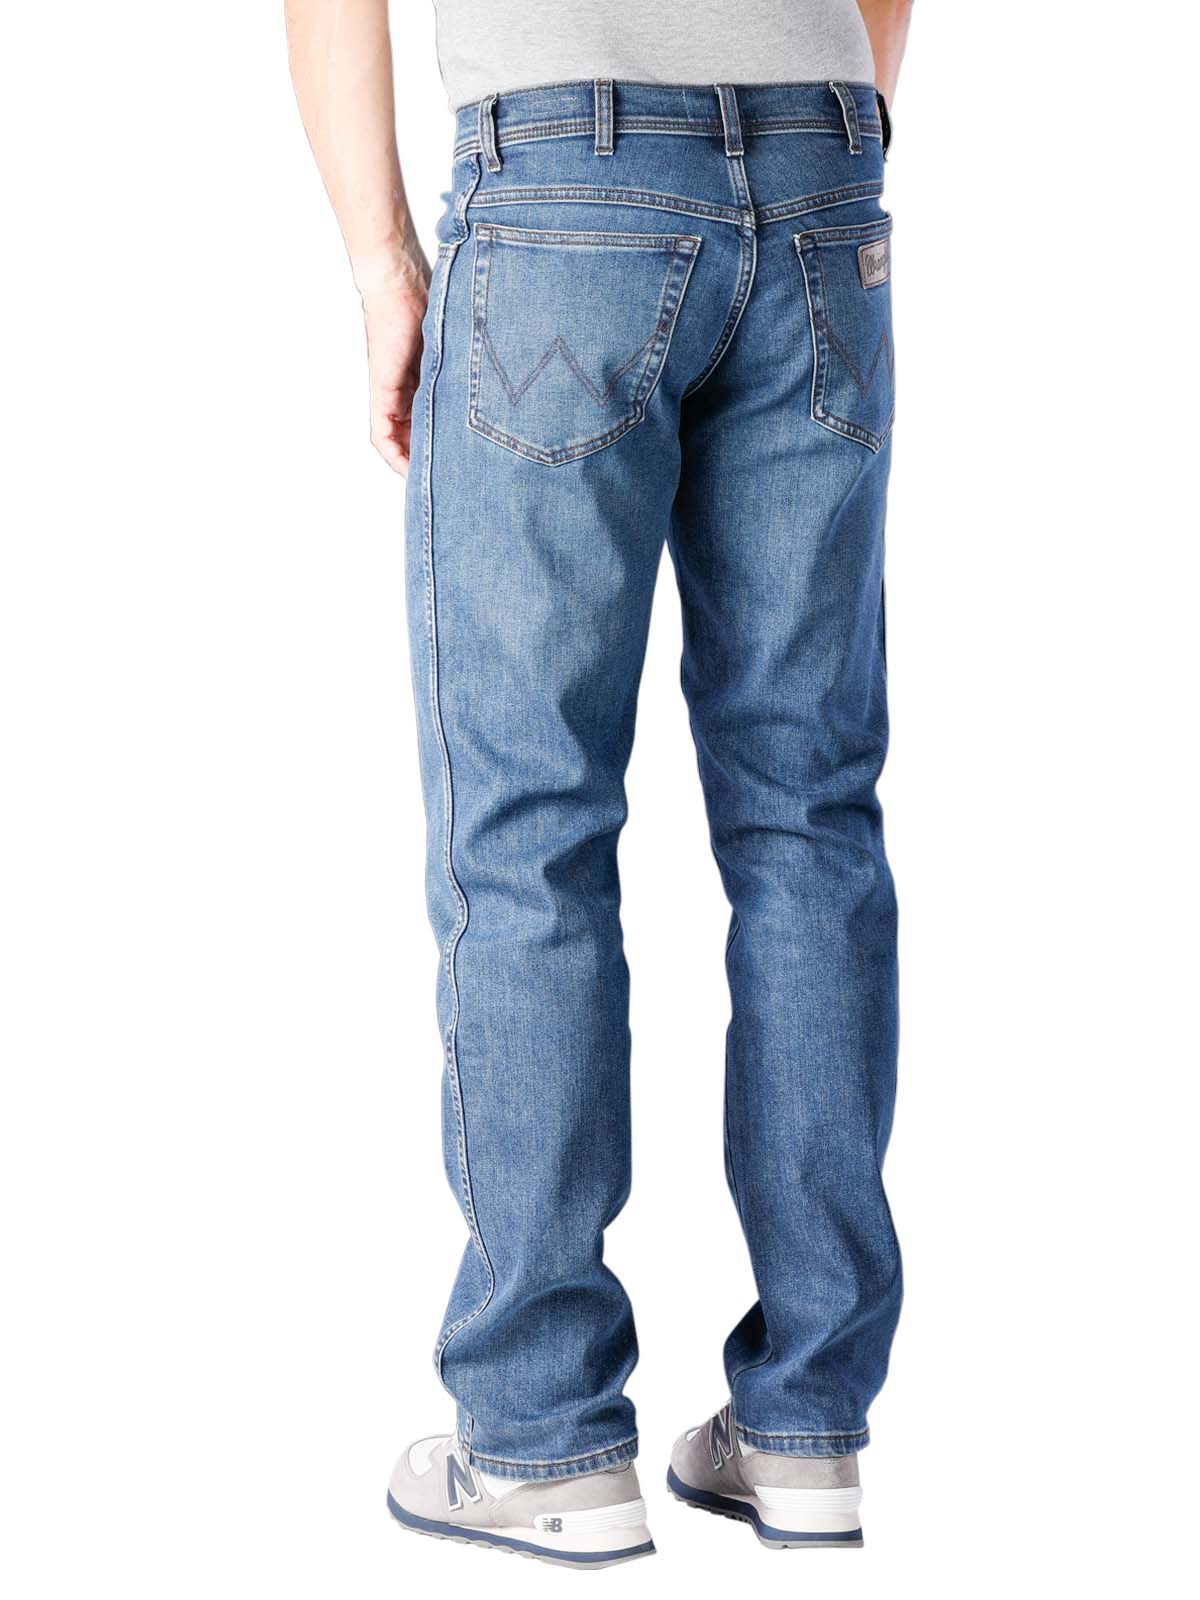 wrangler brushed denim jeans